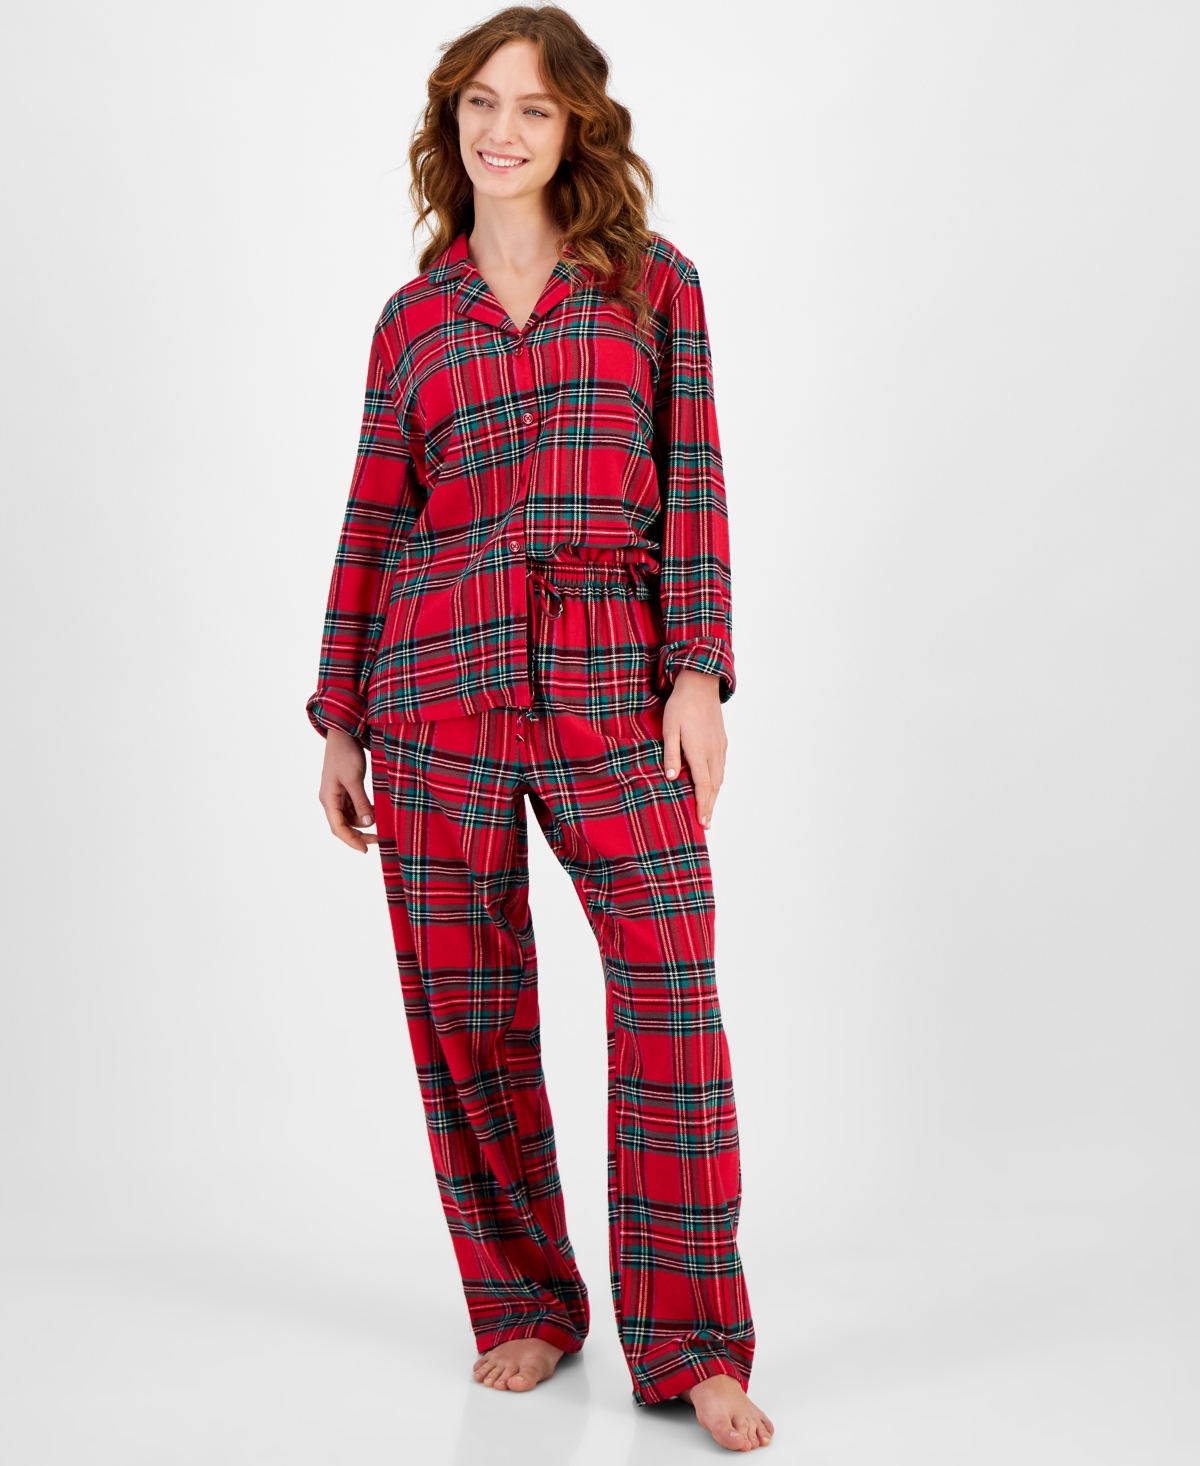 Matching Family Pajamas Women's Brinkley Cotton Plaid Pajamas Set, Created for Macy's - Brinkley Plaid